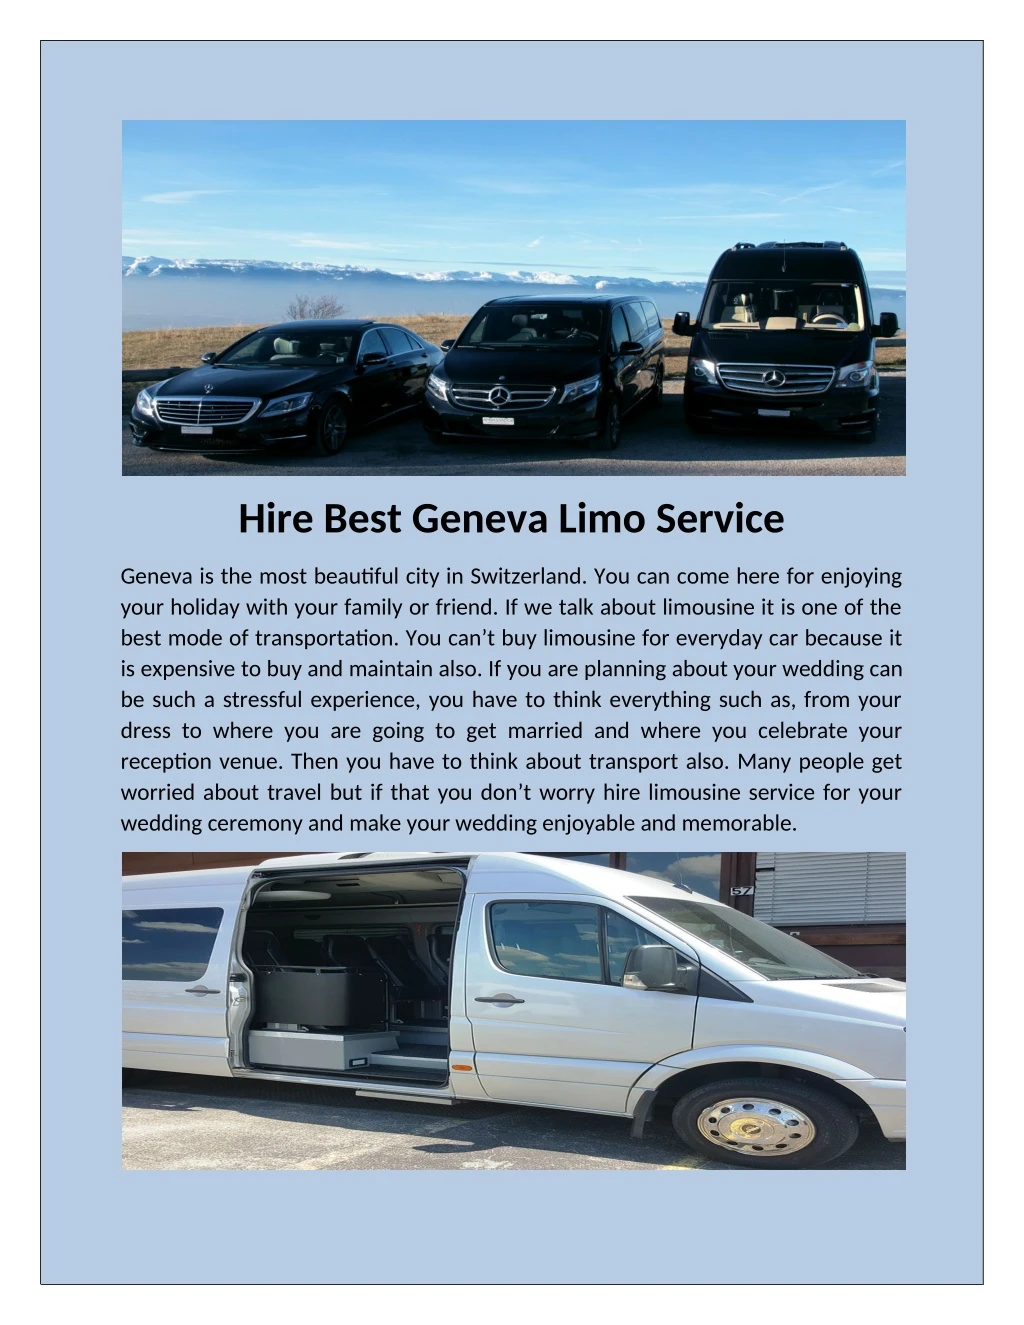 hire best geneva limo service